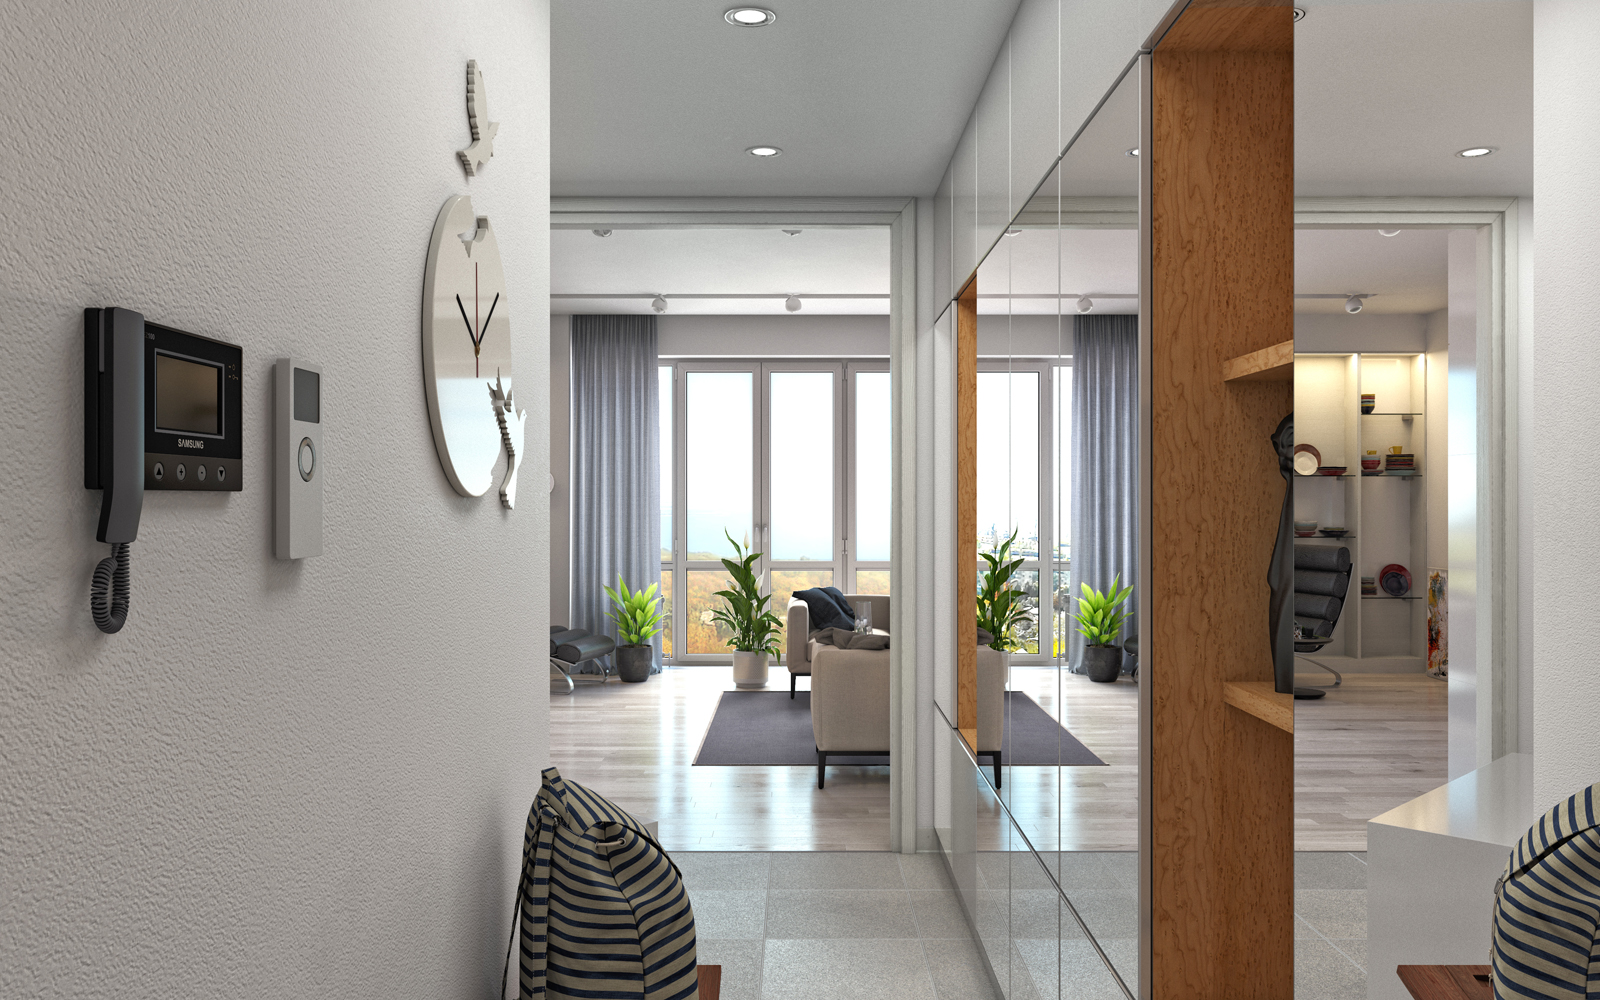 Житловий комплекс "Nobel" 1 кімнатна квартира. в 3d max corona render зображення